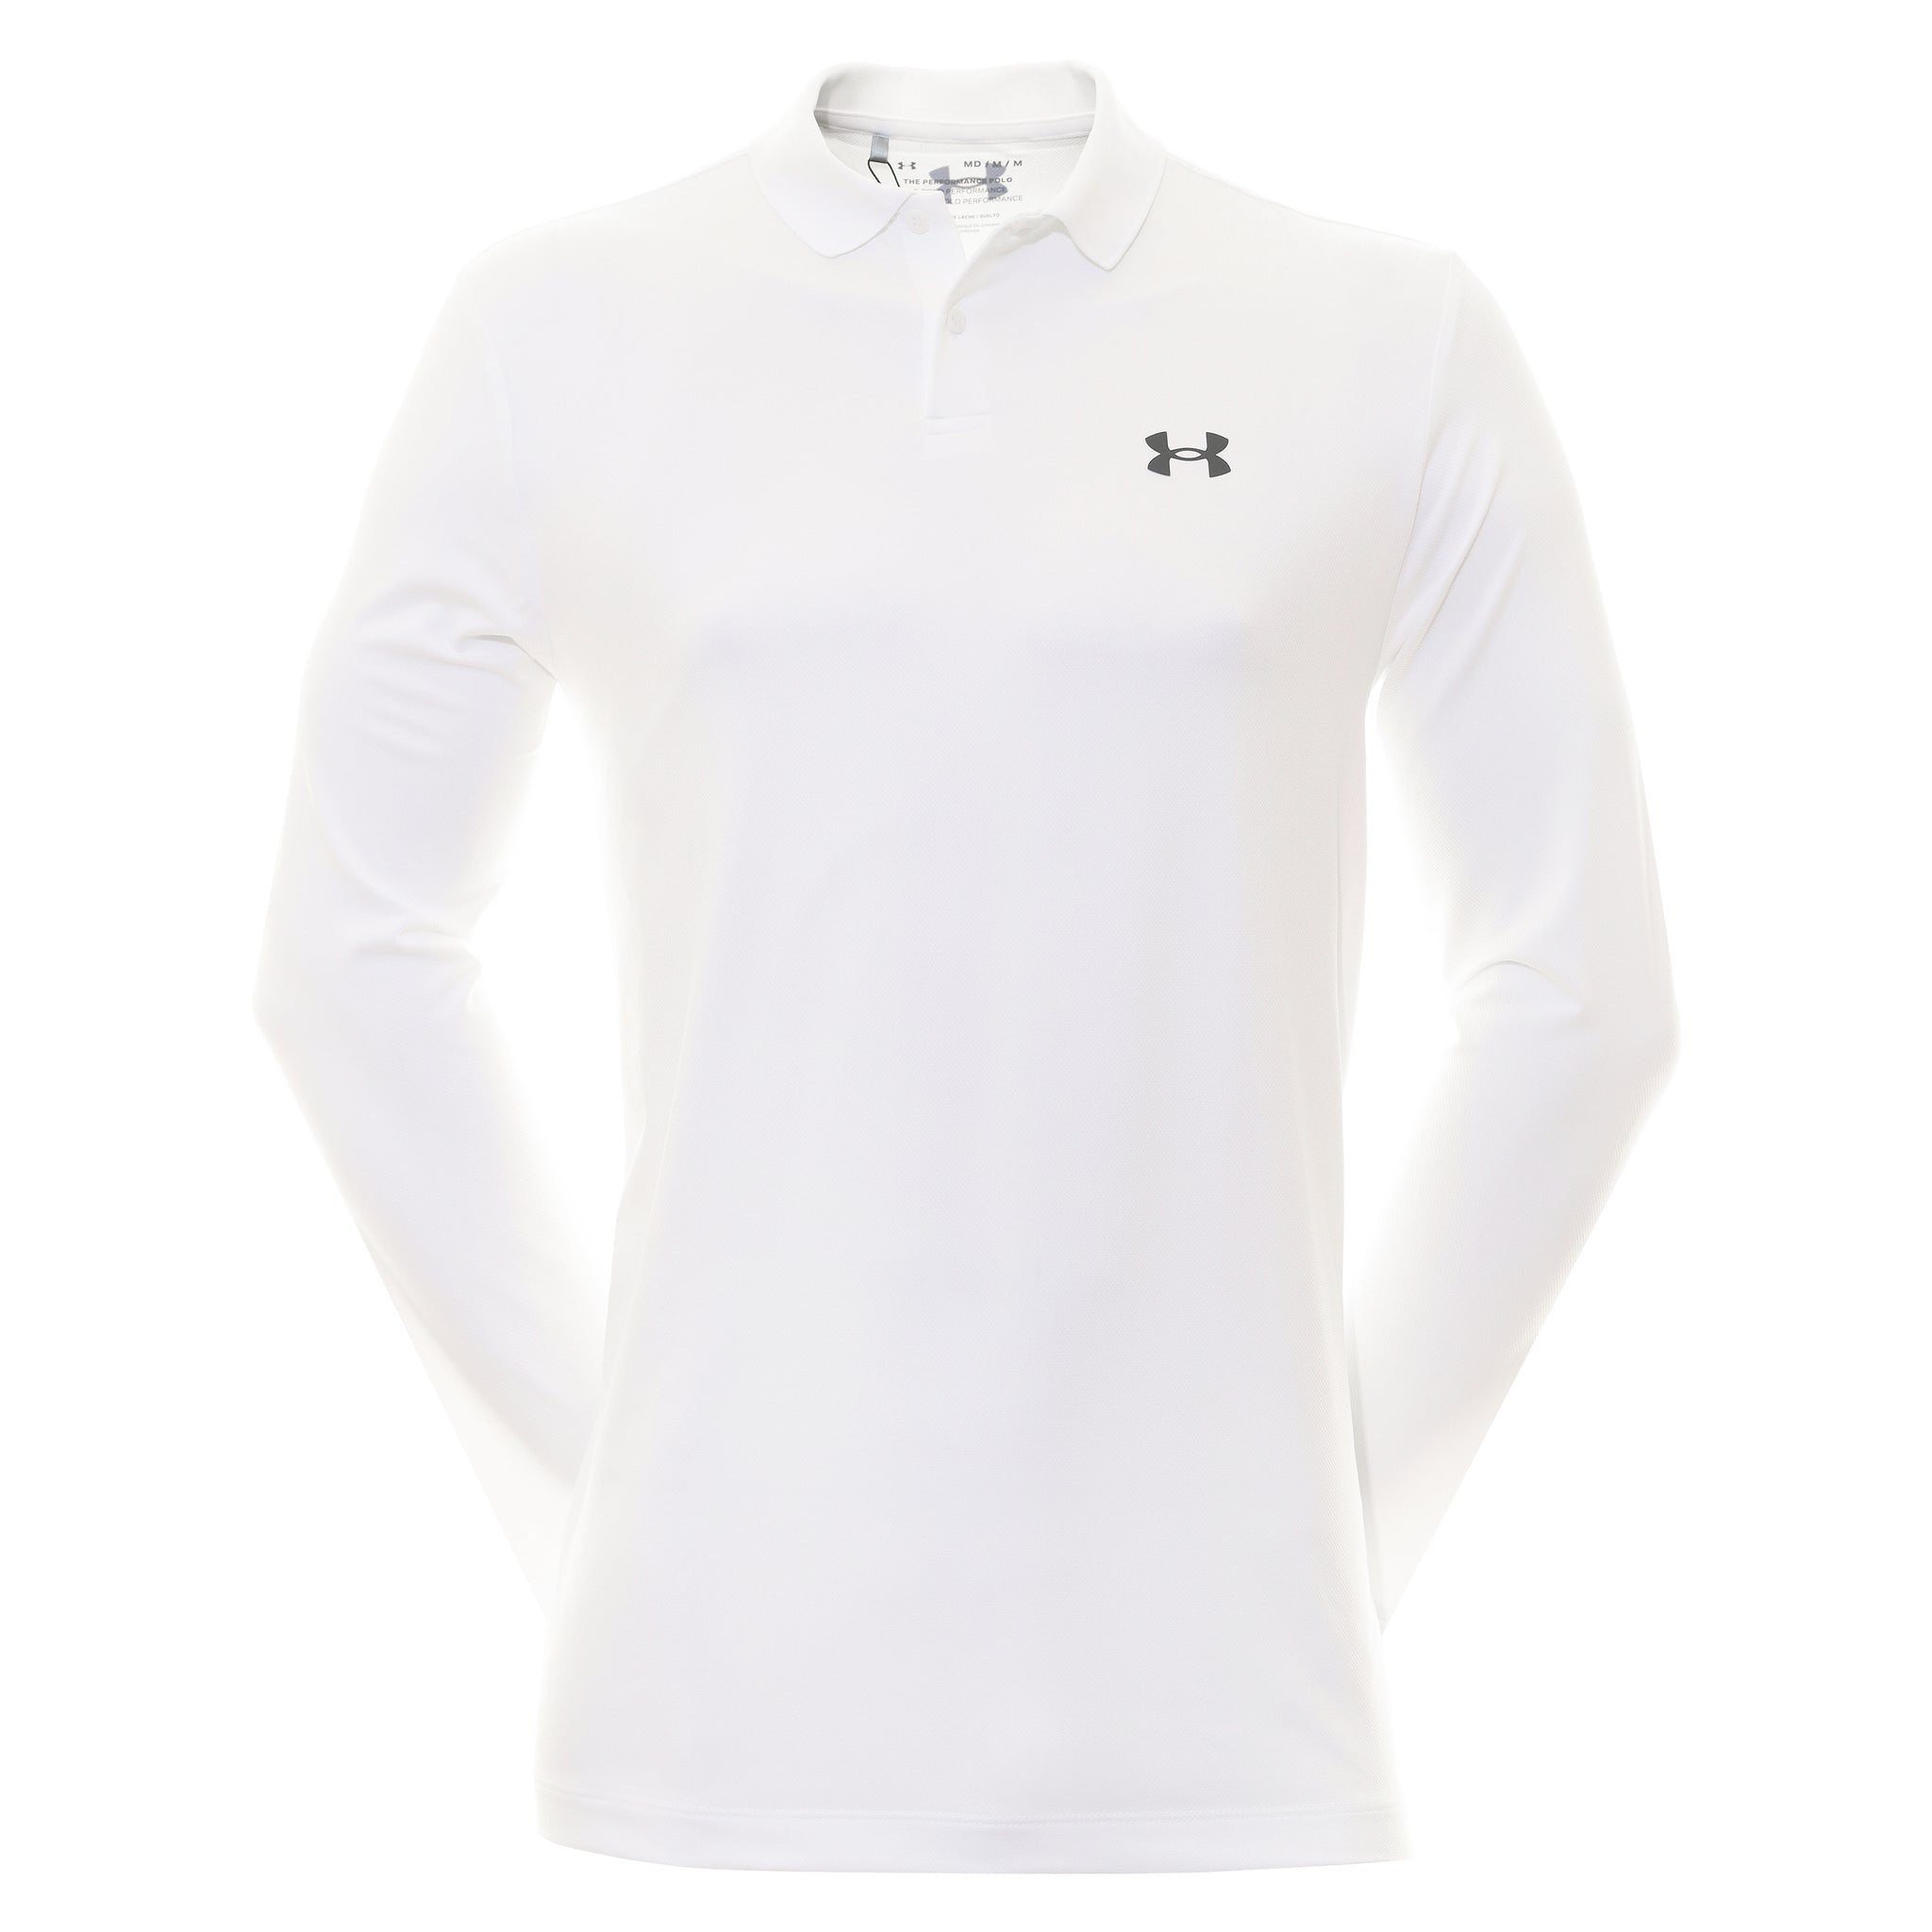 Under Armour Golf Performance 3.0 LS Shirt 1379728 White 100